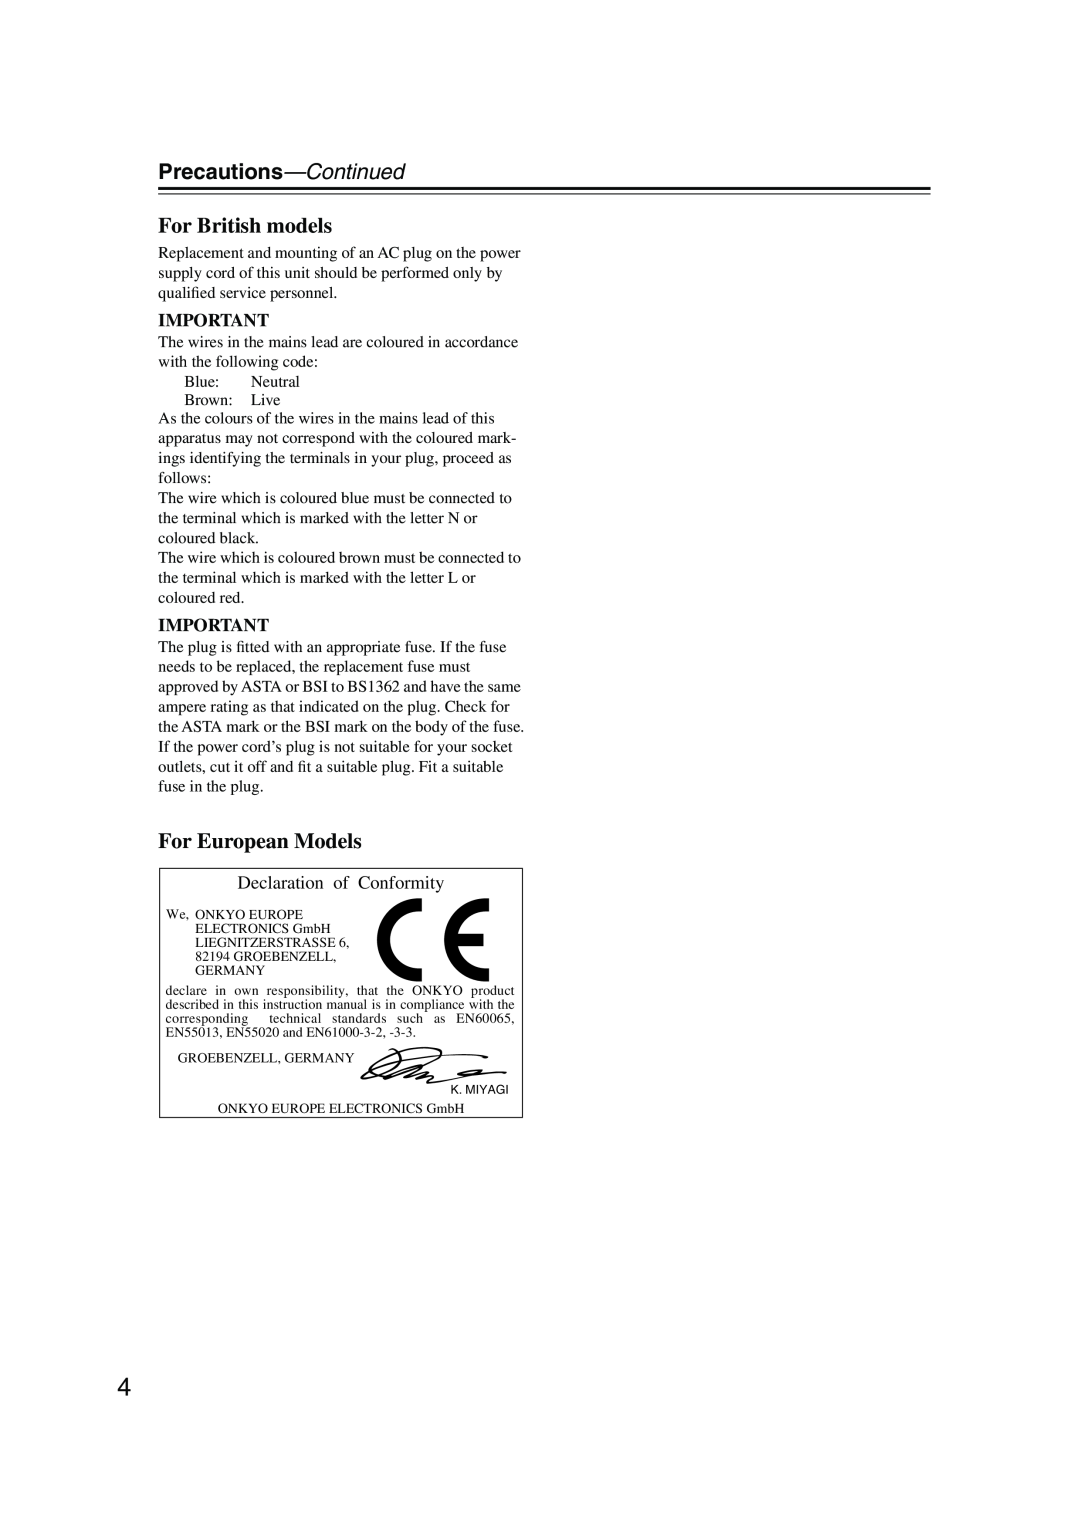 Onkyo TX-NR905 instruction manual Precautions—Continued, For British models, For European Models, Declaration of Conformity 